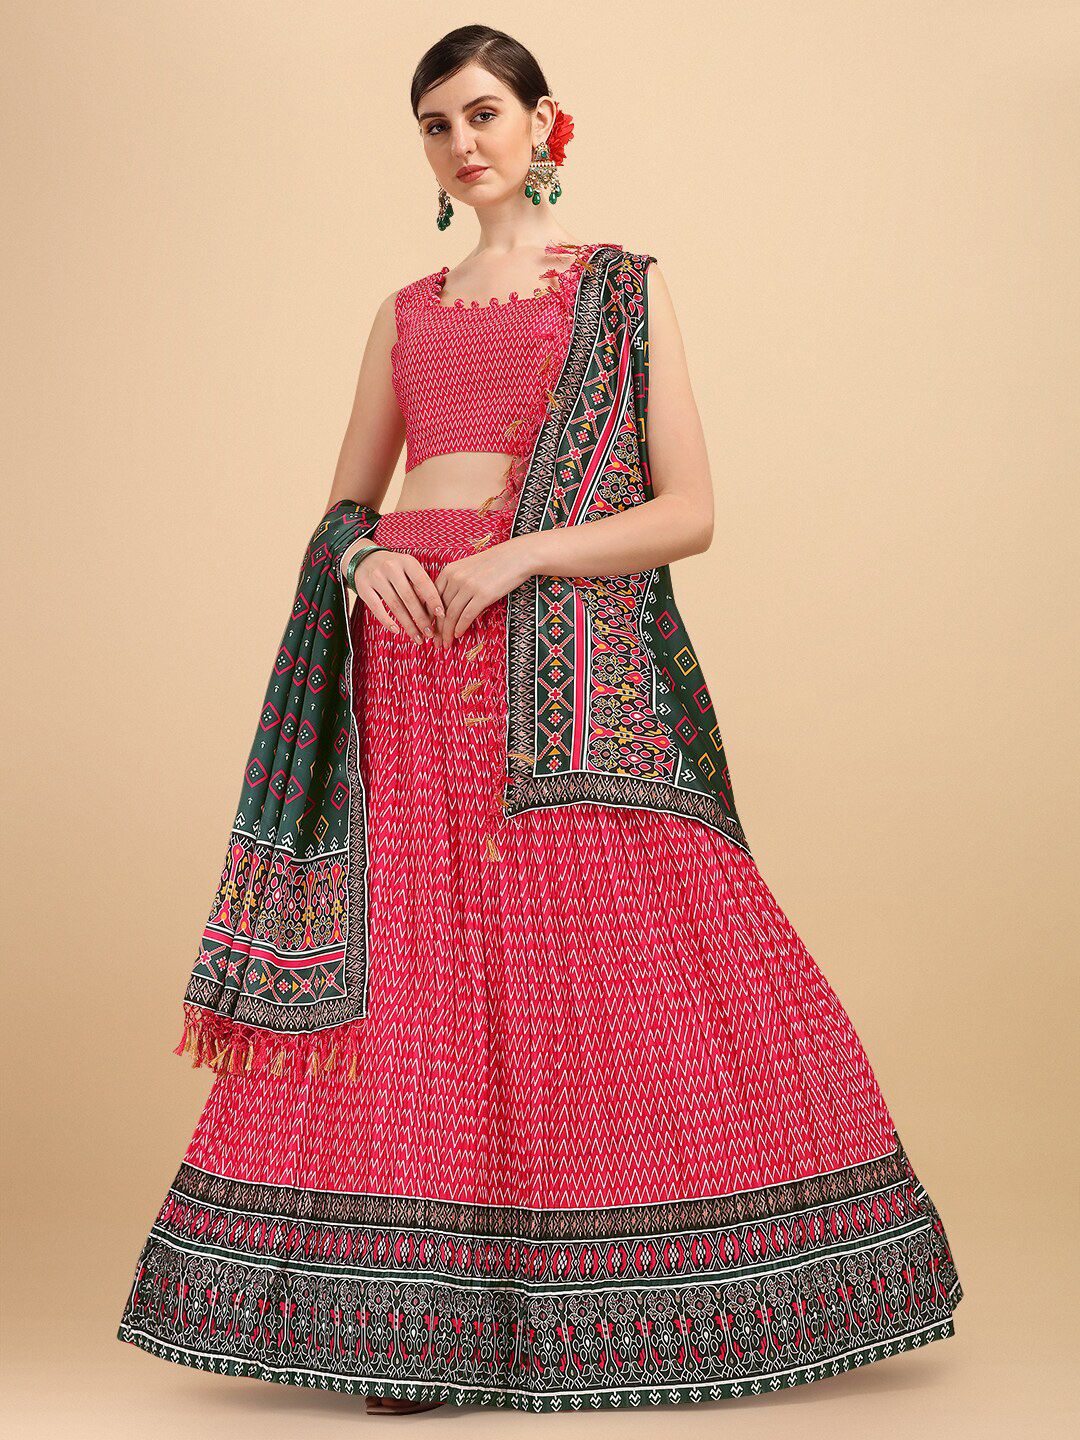 Amrutam Fab Women Pink, Green Printed Semi-Stitched Lehenga, Unstitched Blouse & Dupatta Price in India